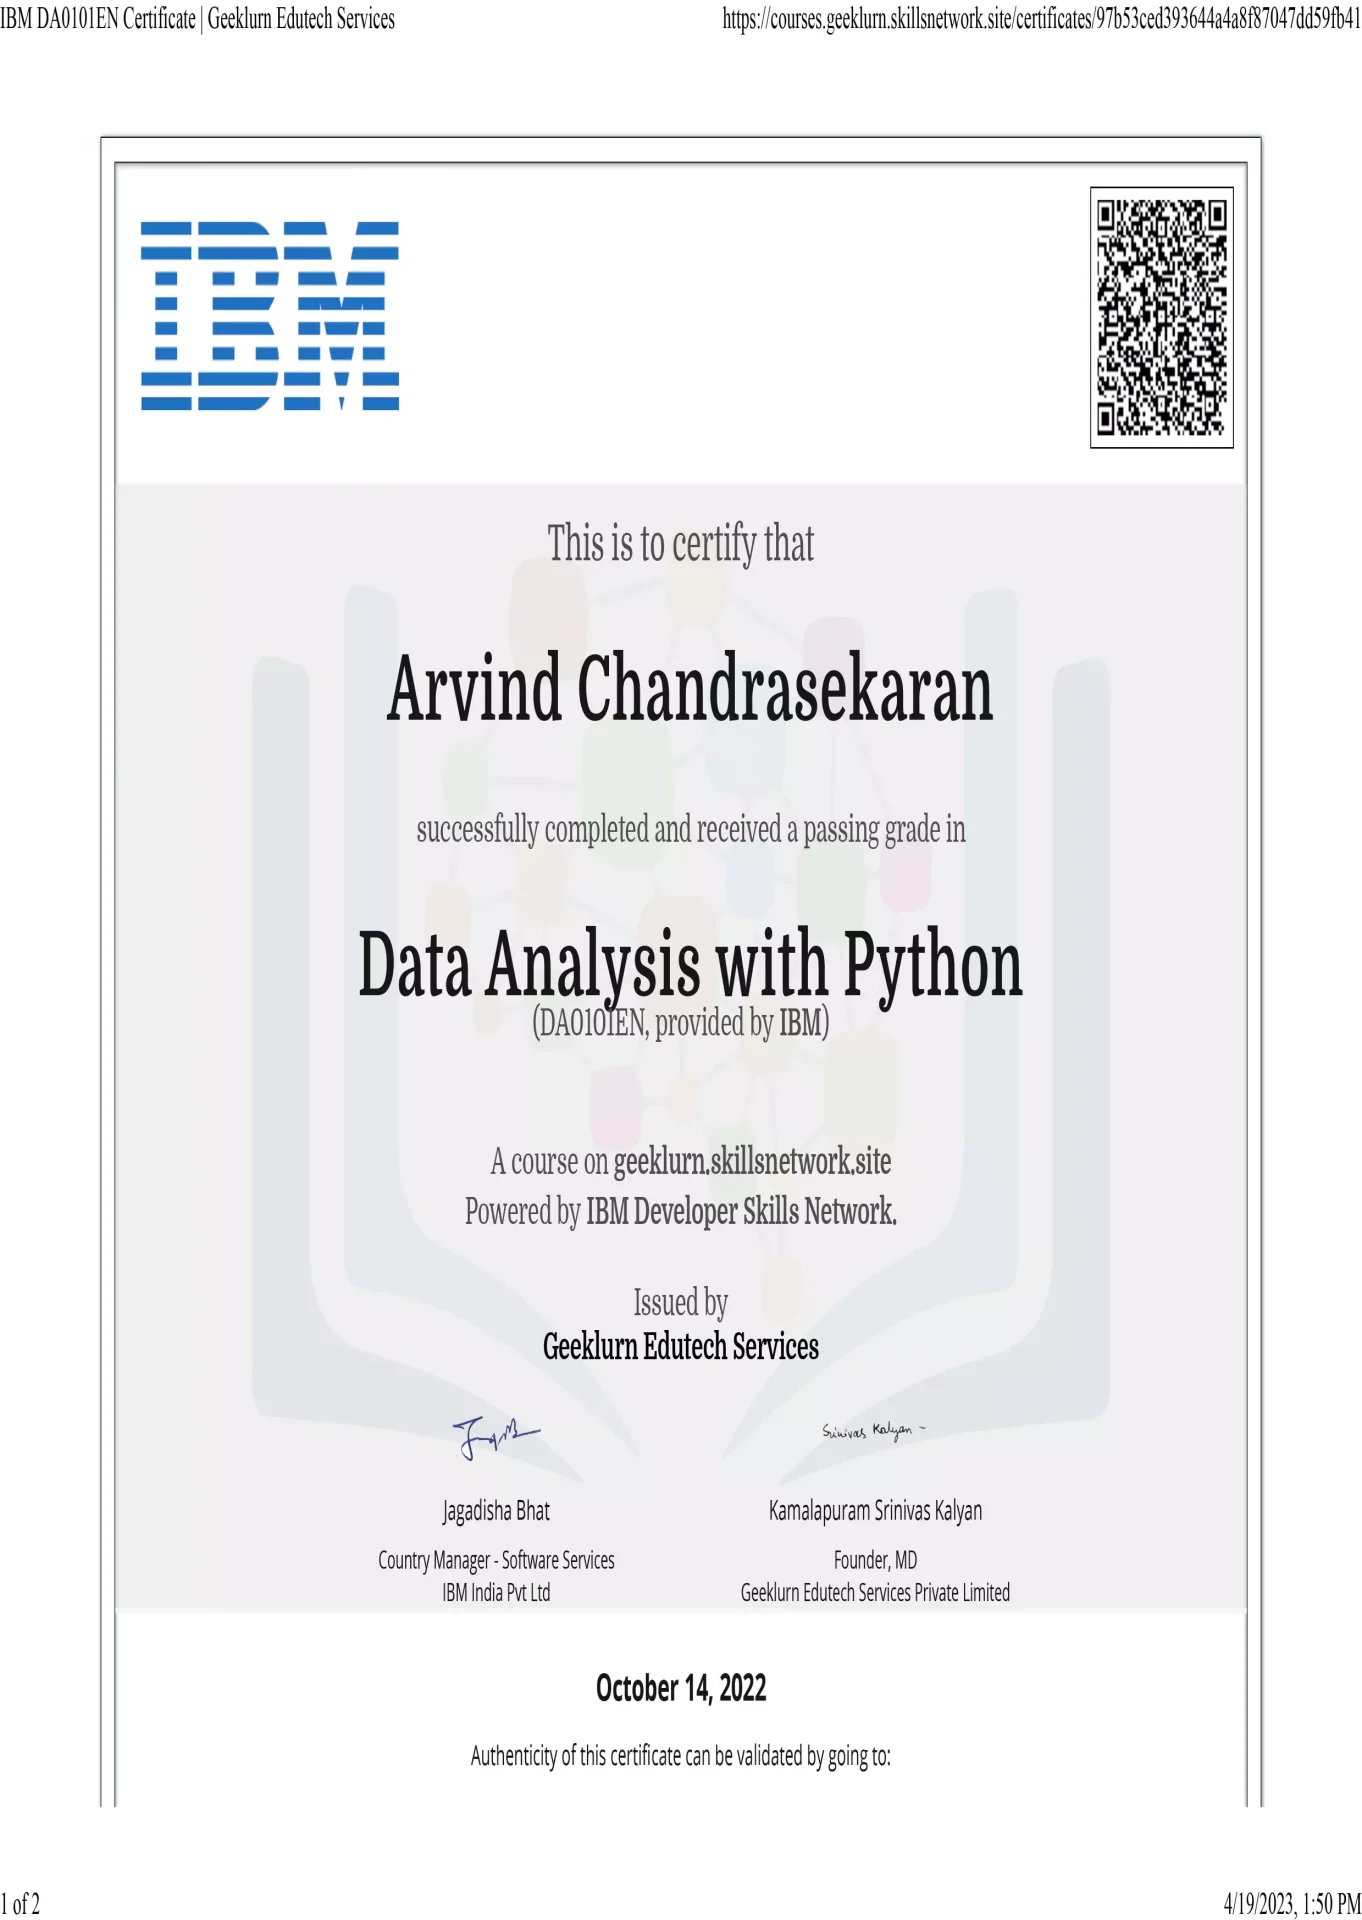 data-analysis-with-python-oct-14-2022